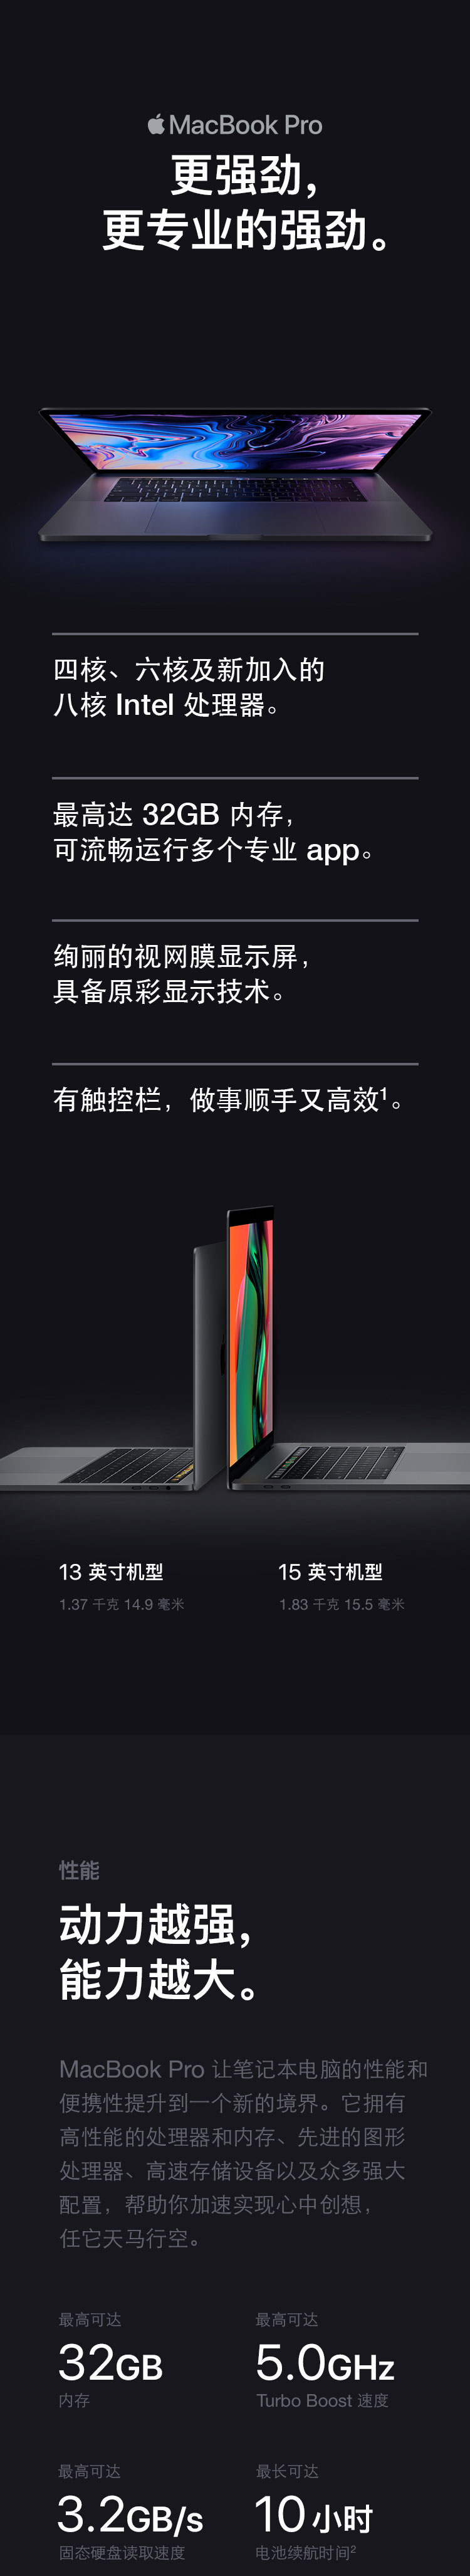 Apple 2019新品 MacBook Pro 13.3【带触控栏】八代i5 8G 512G 2.4GHz 银色 笔记本电脑 轻薄本 MV9A2CH/A